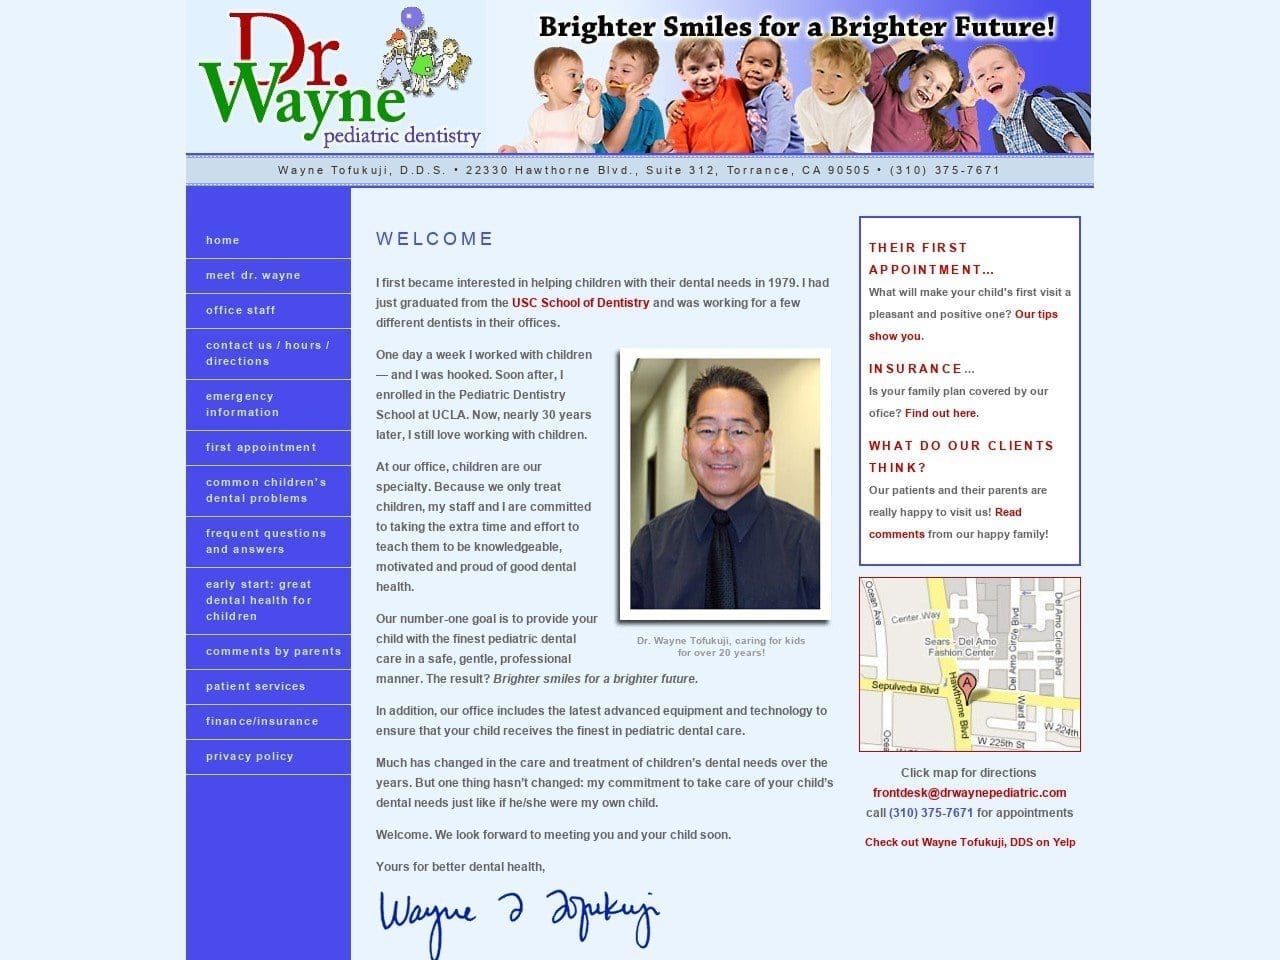 Dr. Wayne Tofukuji DDS Website Screenshot from drwaynepediatric.com